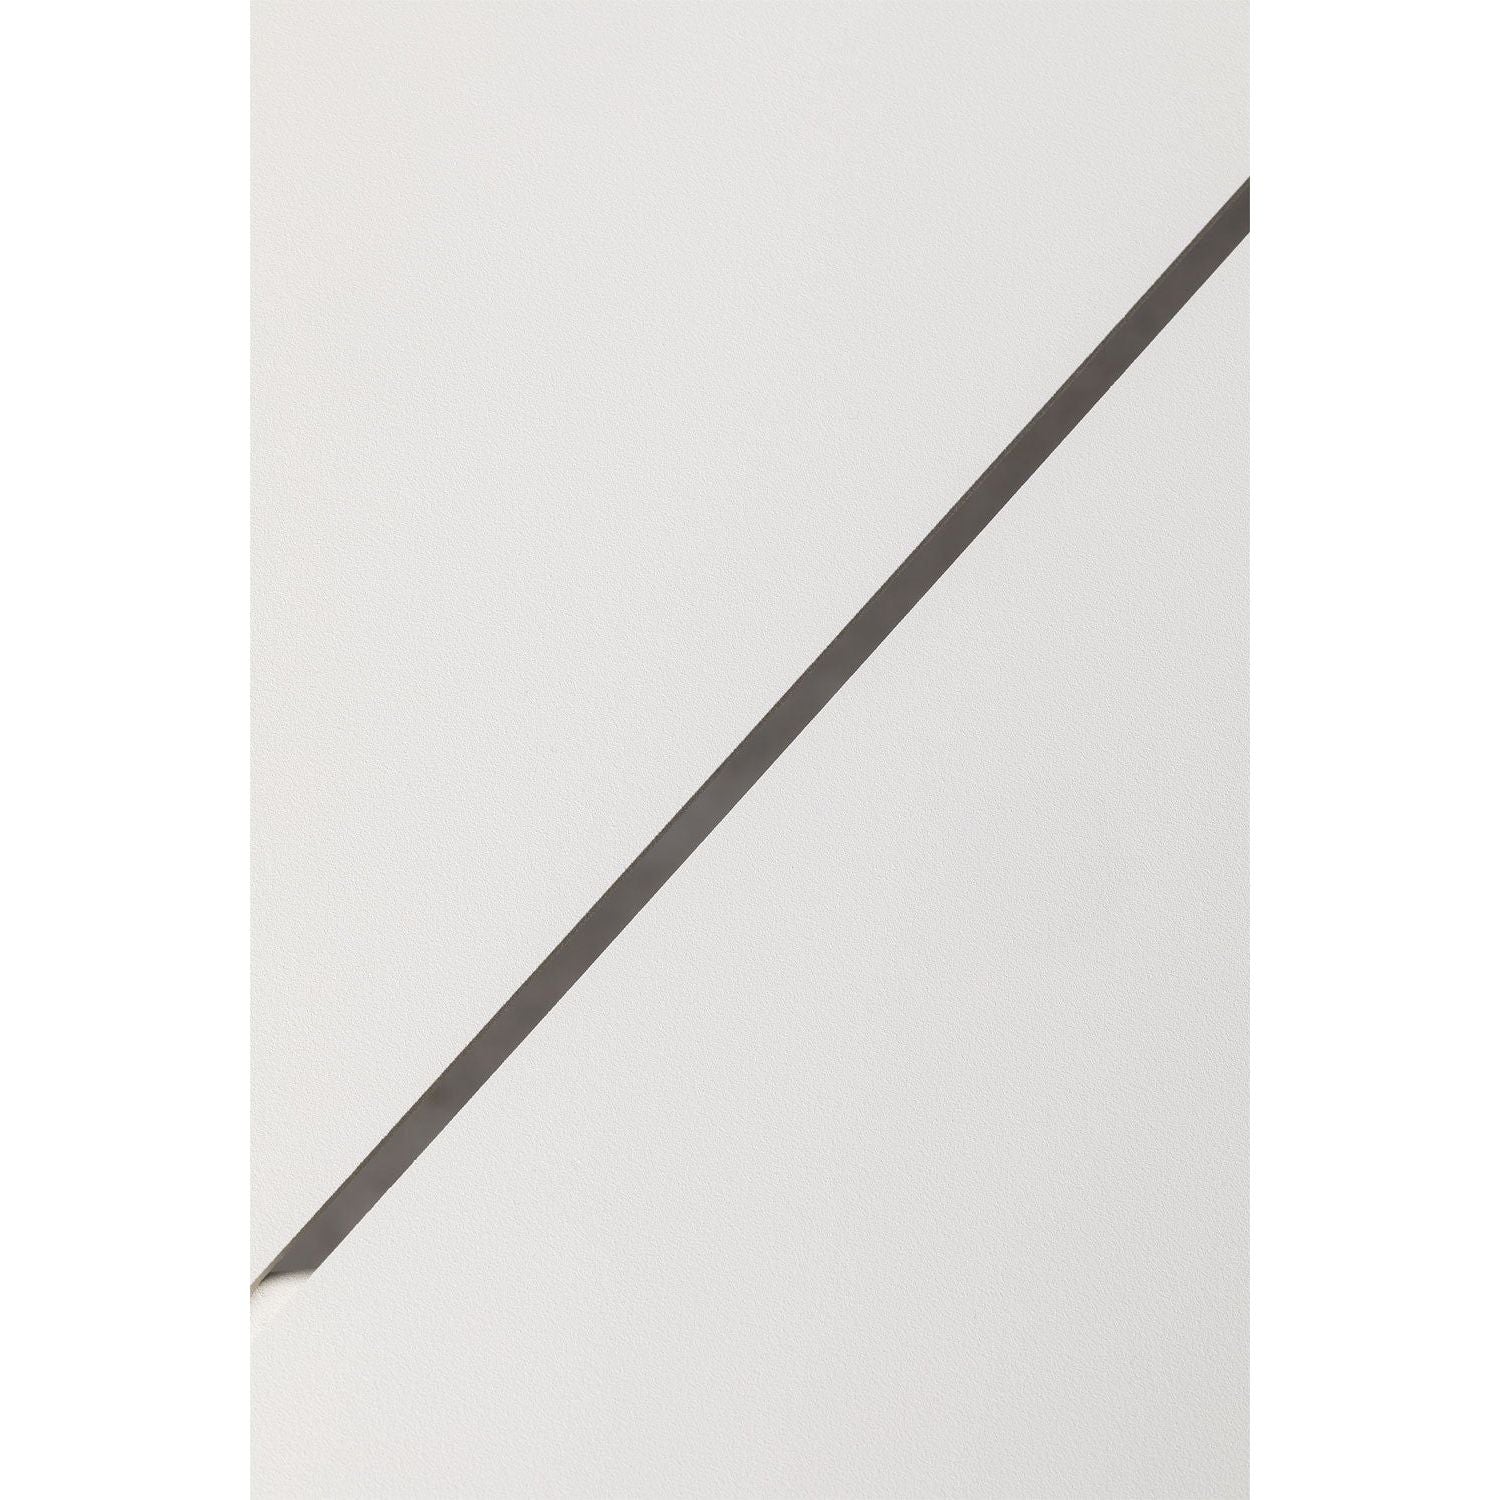 Lauko stalas KAYLEI, aliuminis, balta spalva, 160x90 cm